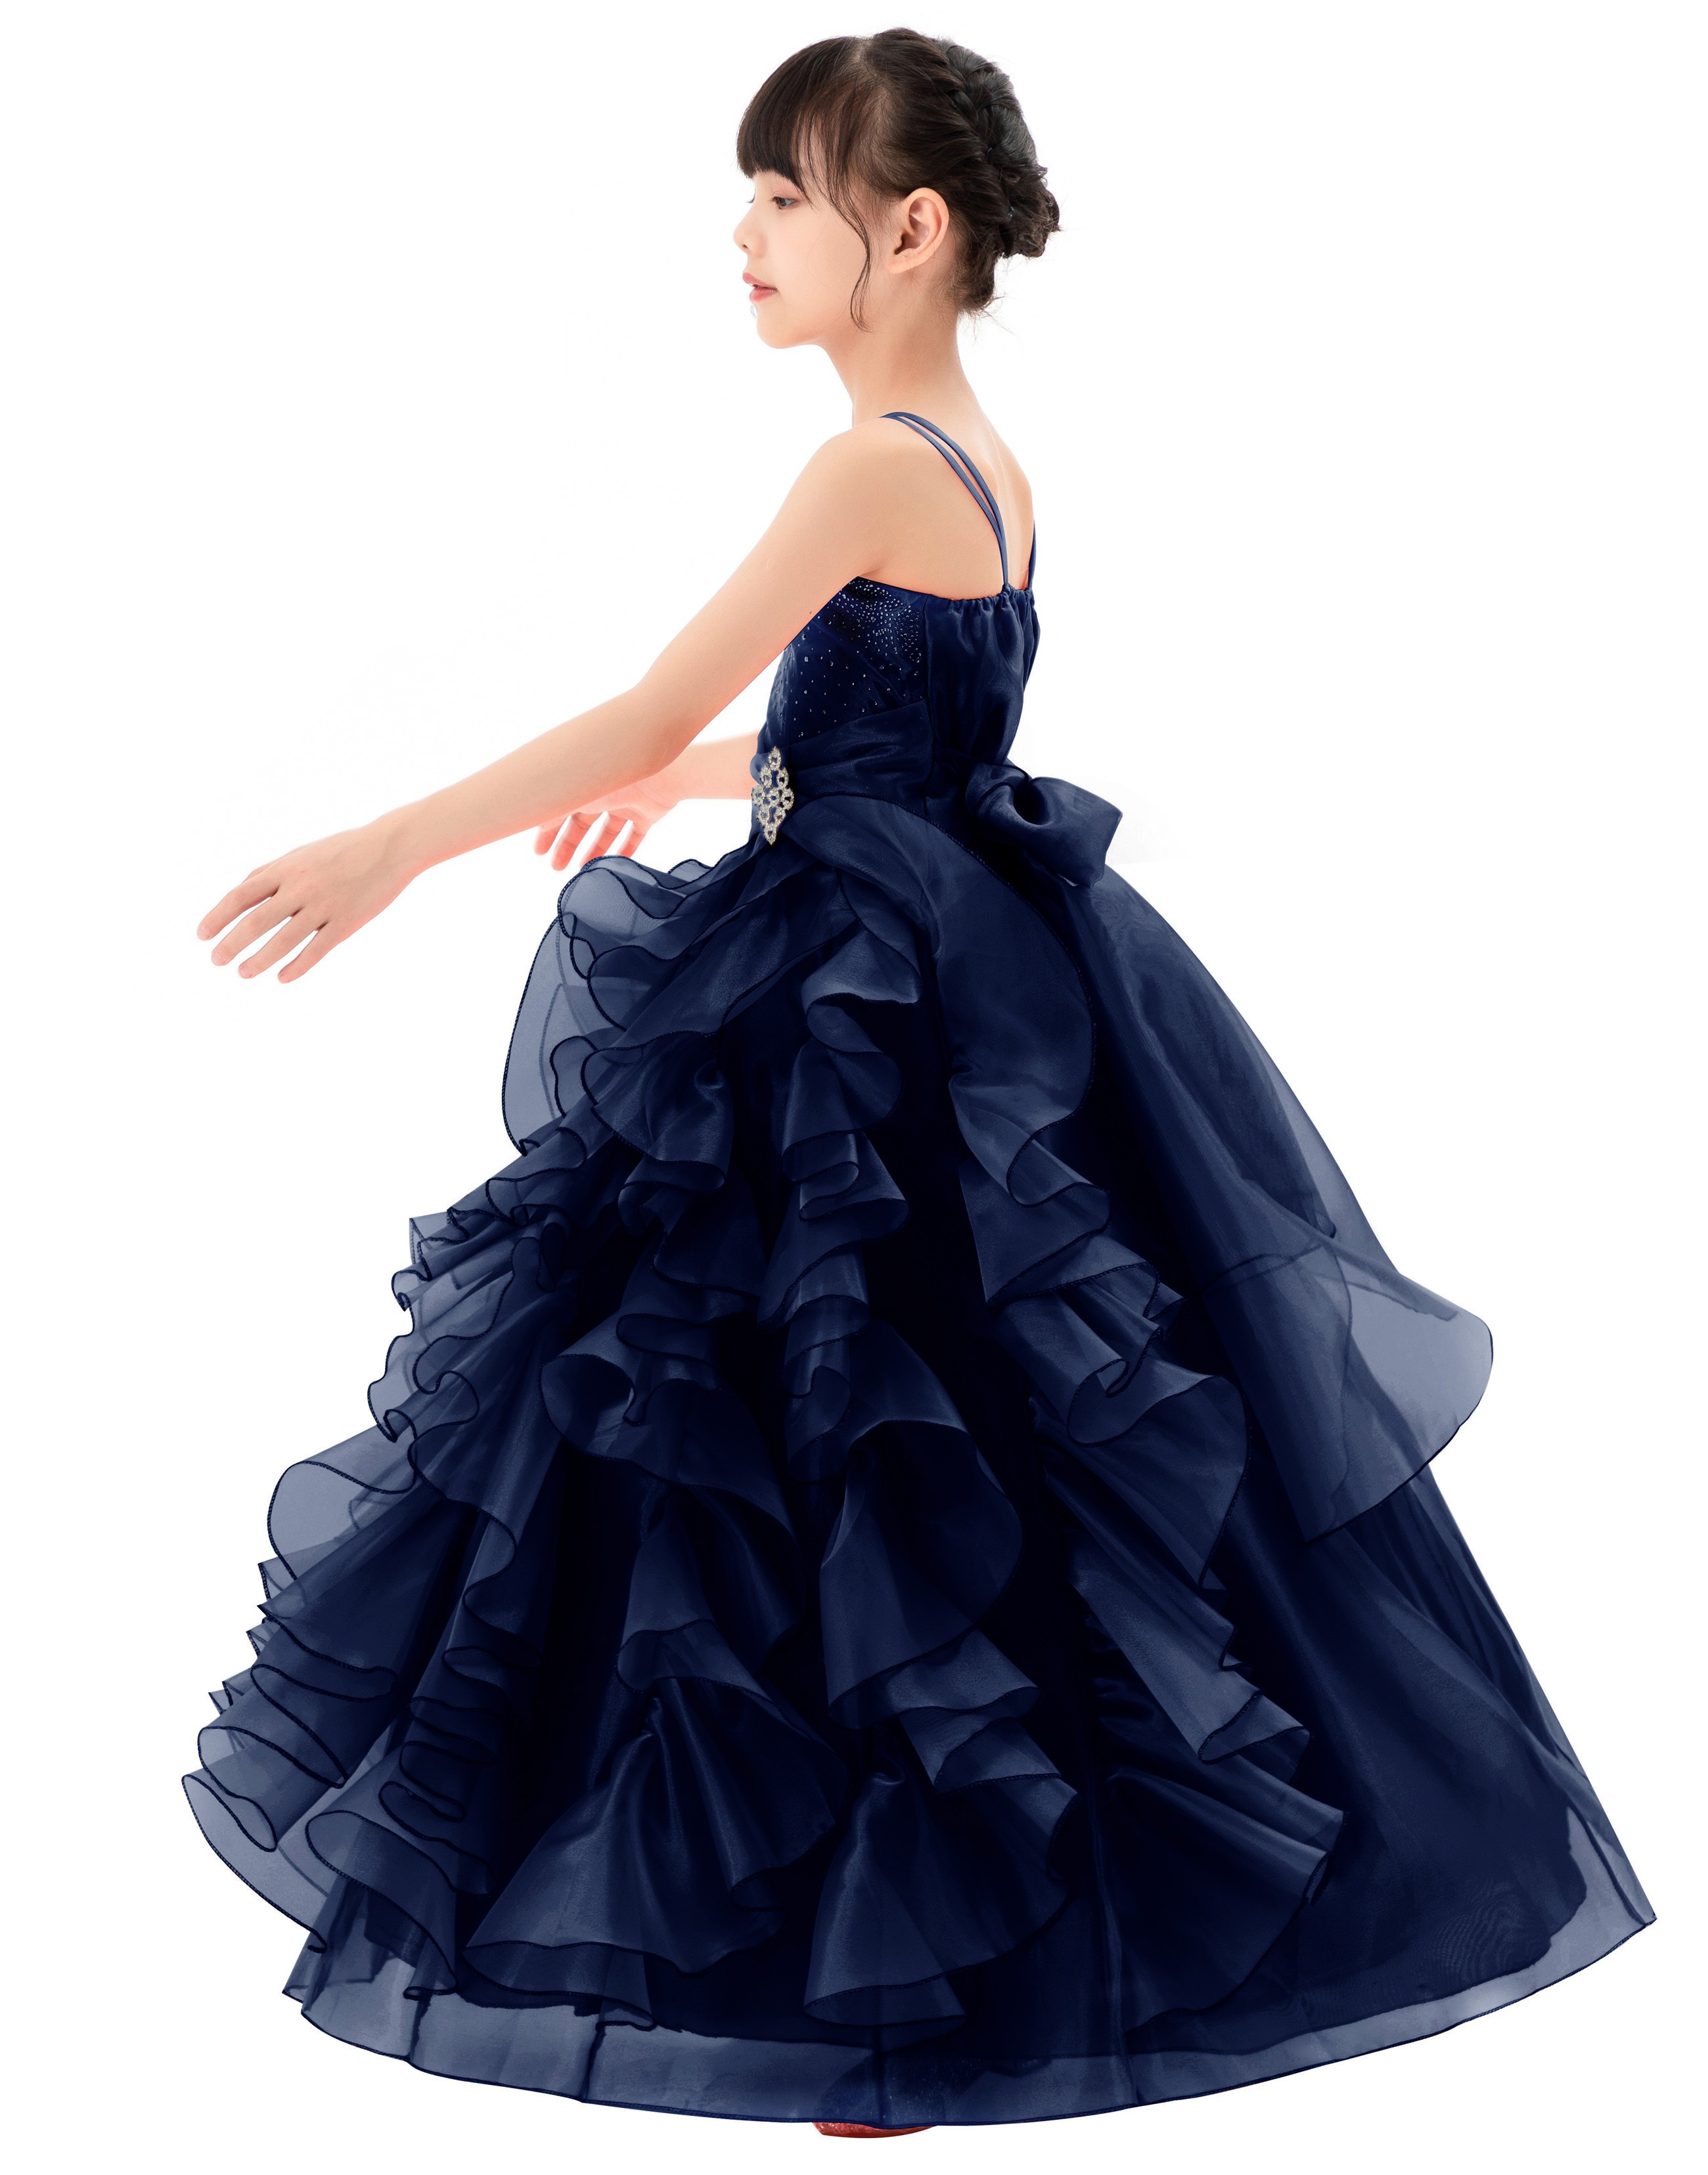 Marine Blue Ruffle Organza Overlay Flower Girl Dress Seq5